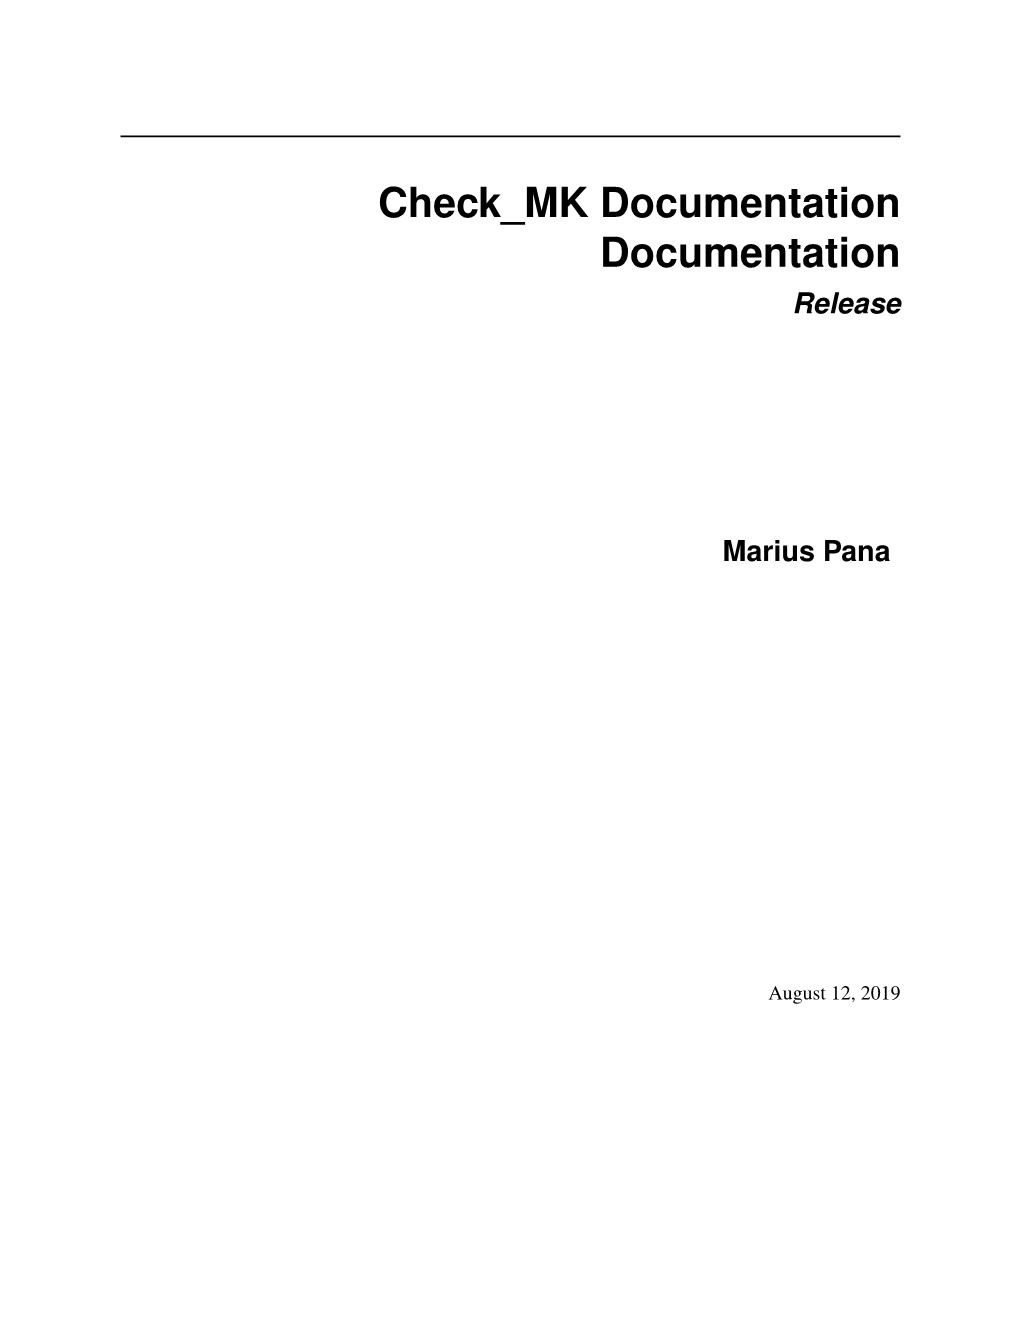 Check MK Documentation Documentation Release